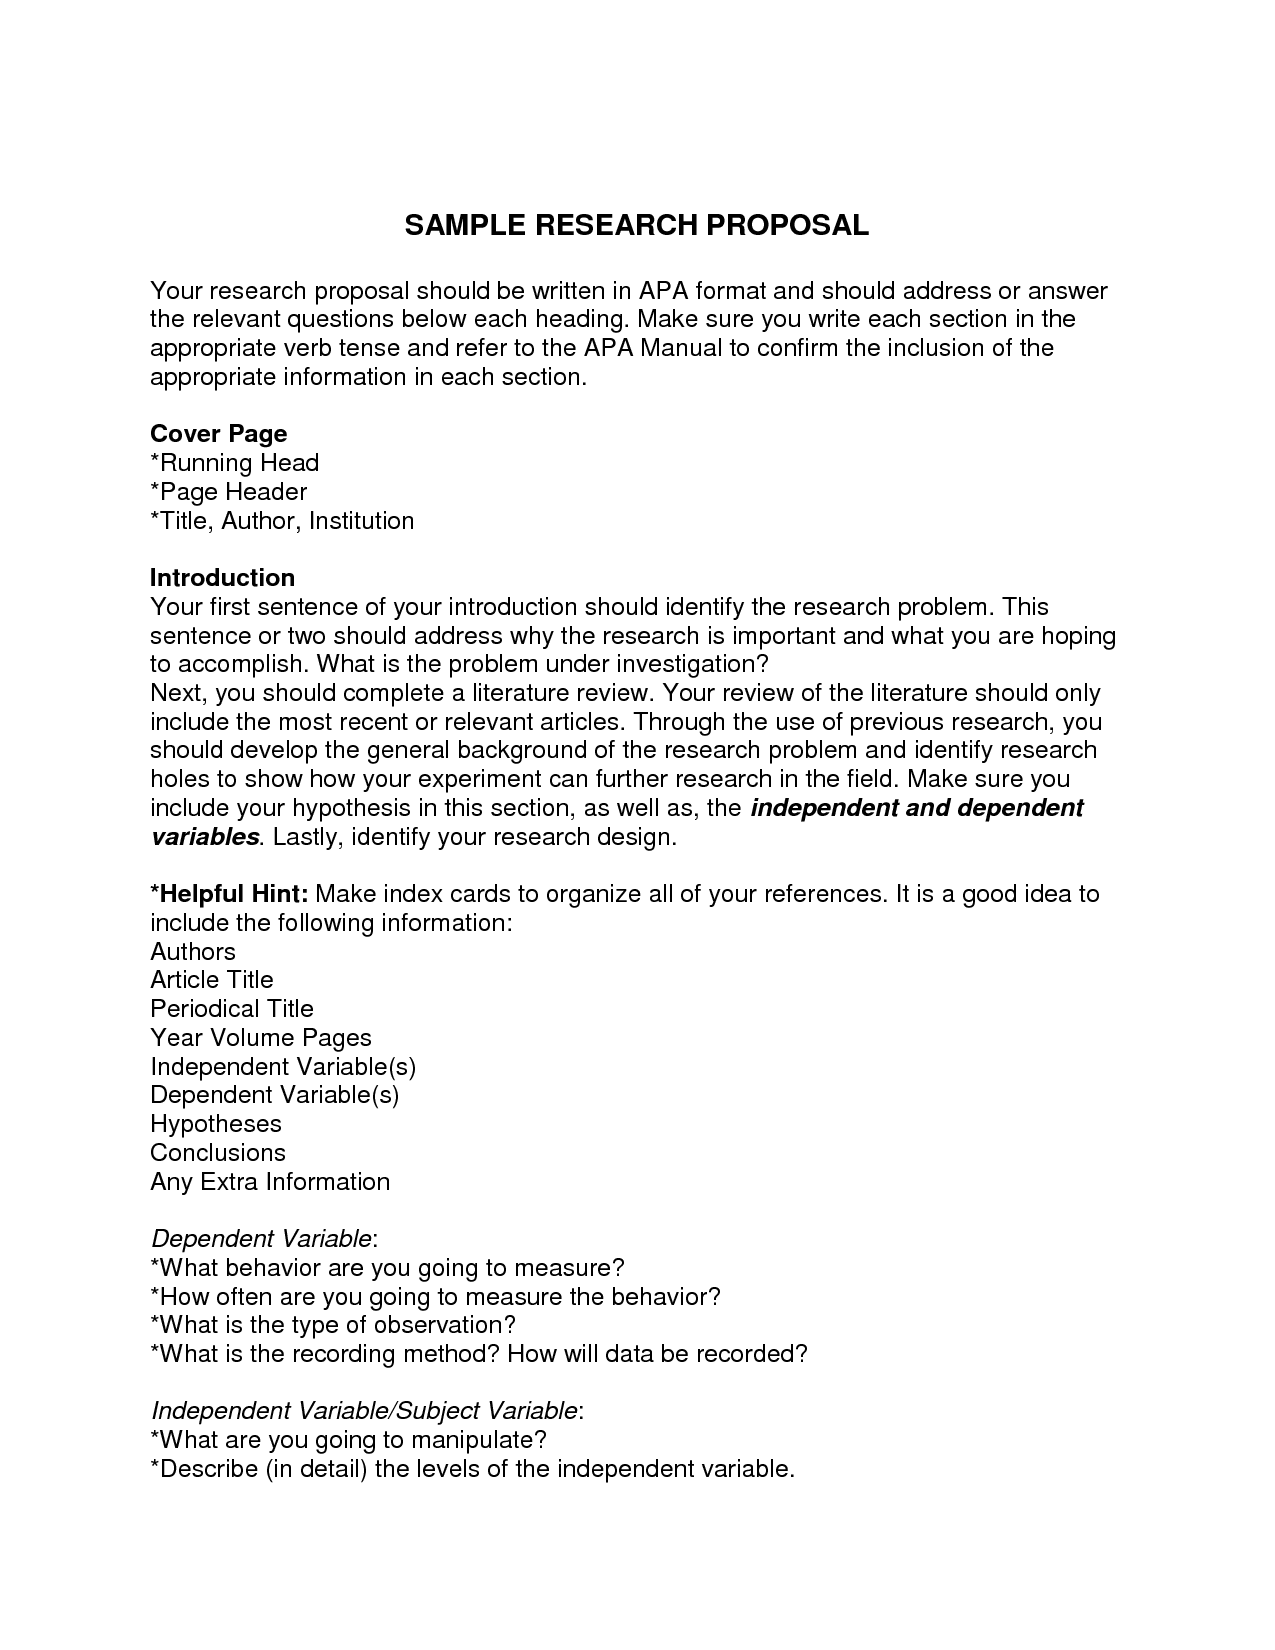 apa format research proposal